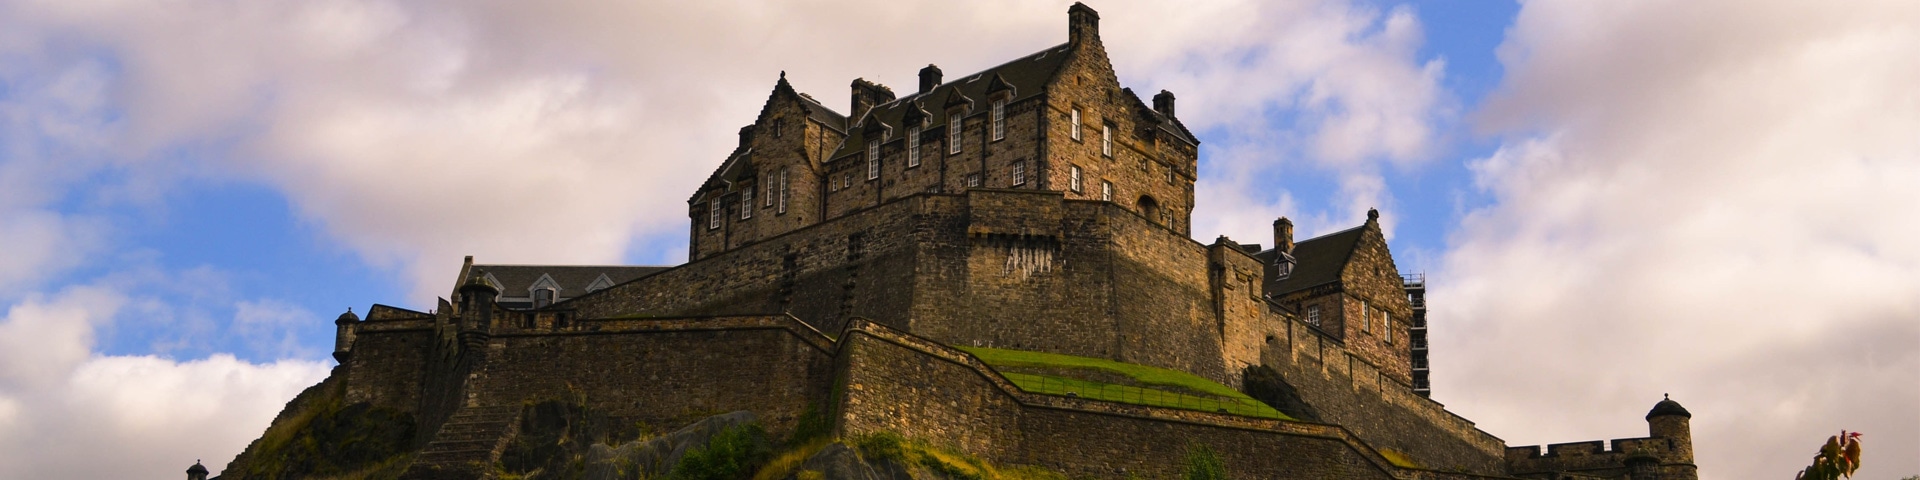 Edinburgh Castle Feature Image Tiered Pricing Blog Appointedd